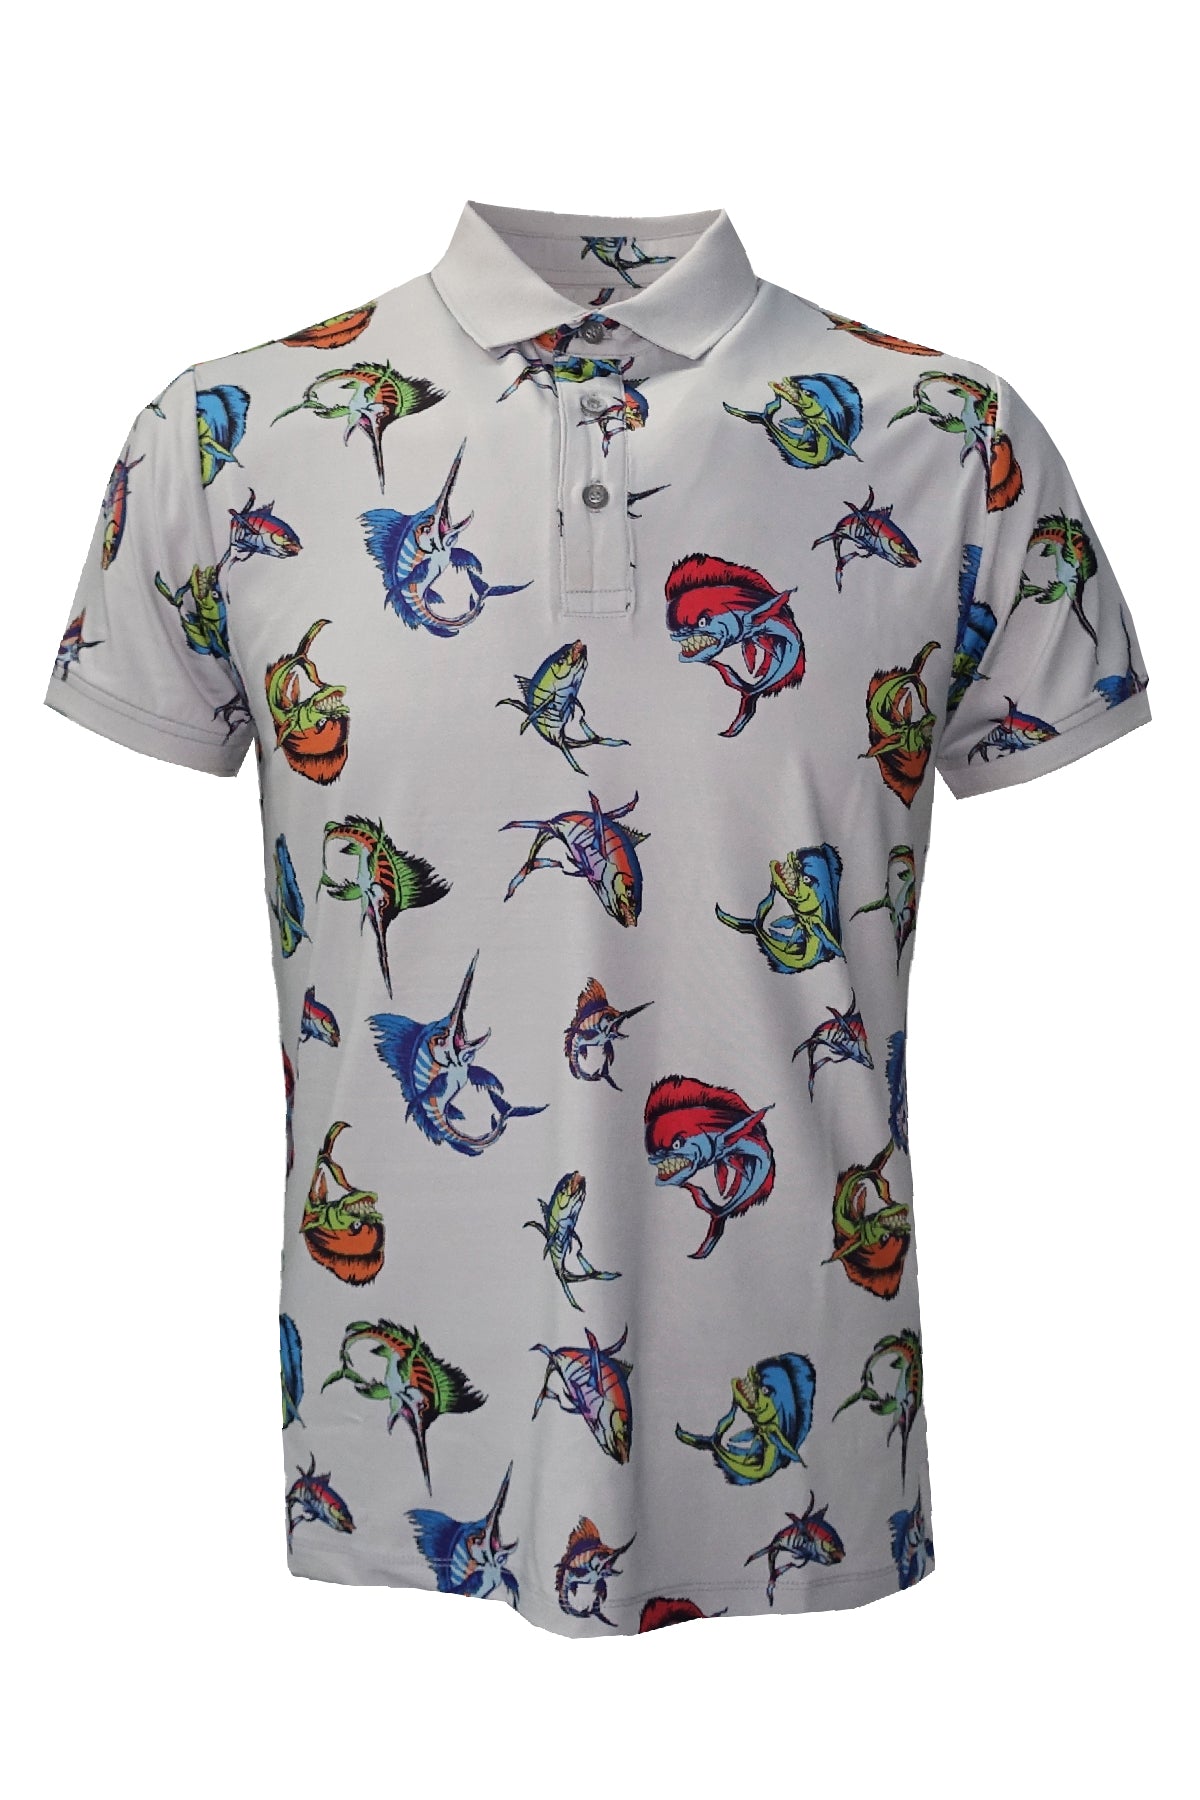 League Men's Short Sleeve Fisherman Sailor Cartoon Patterned Grey UV Protected Polo Shirt